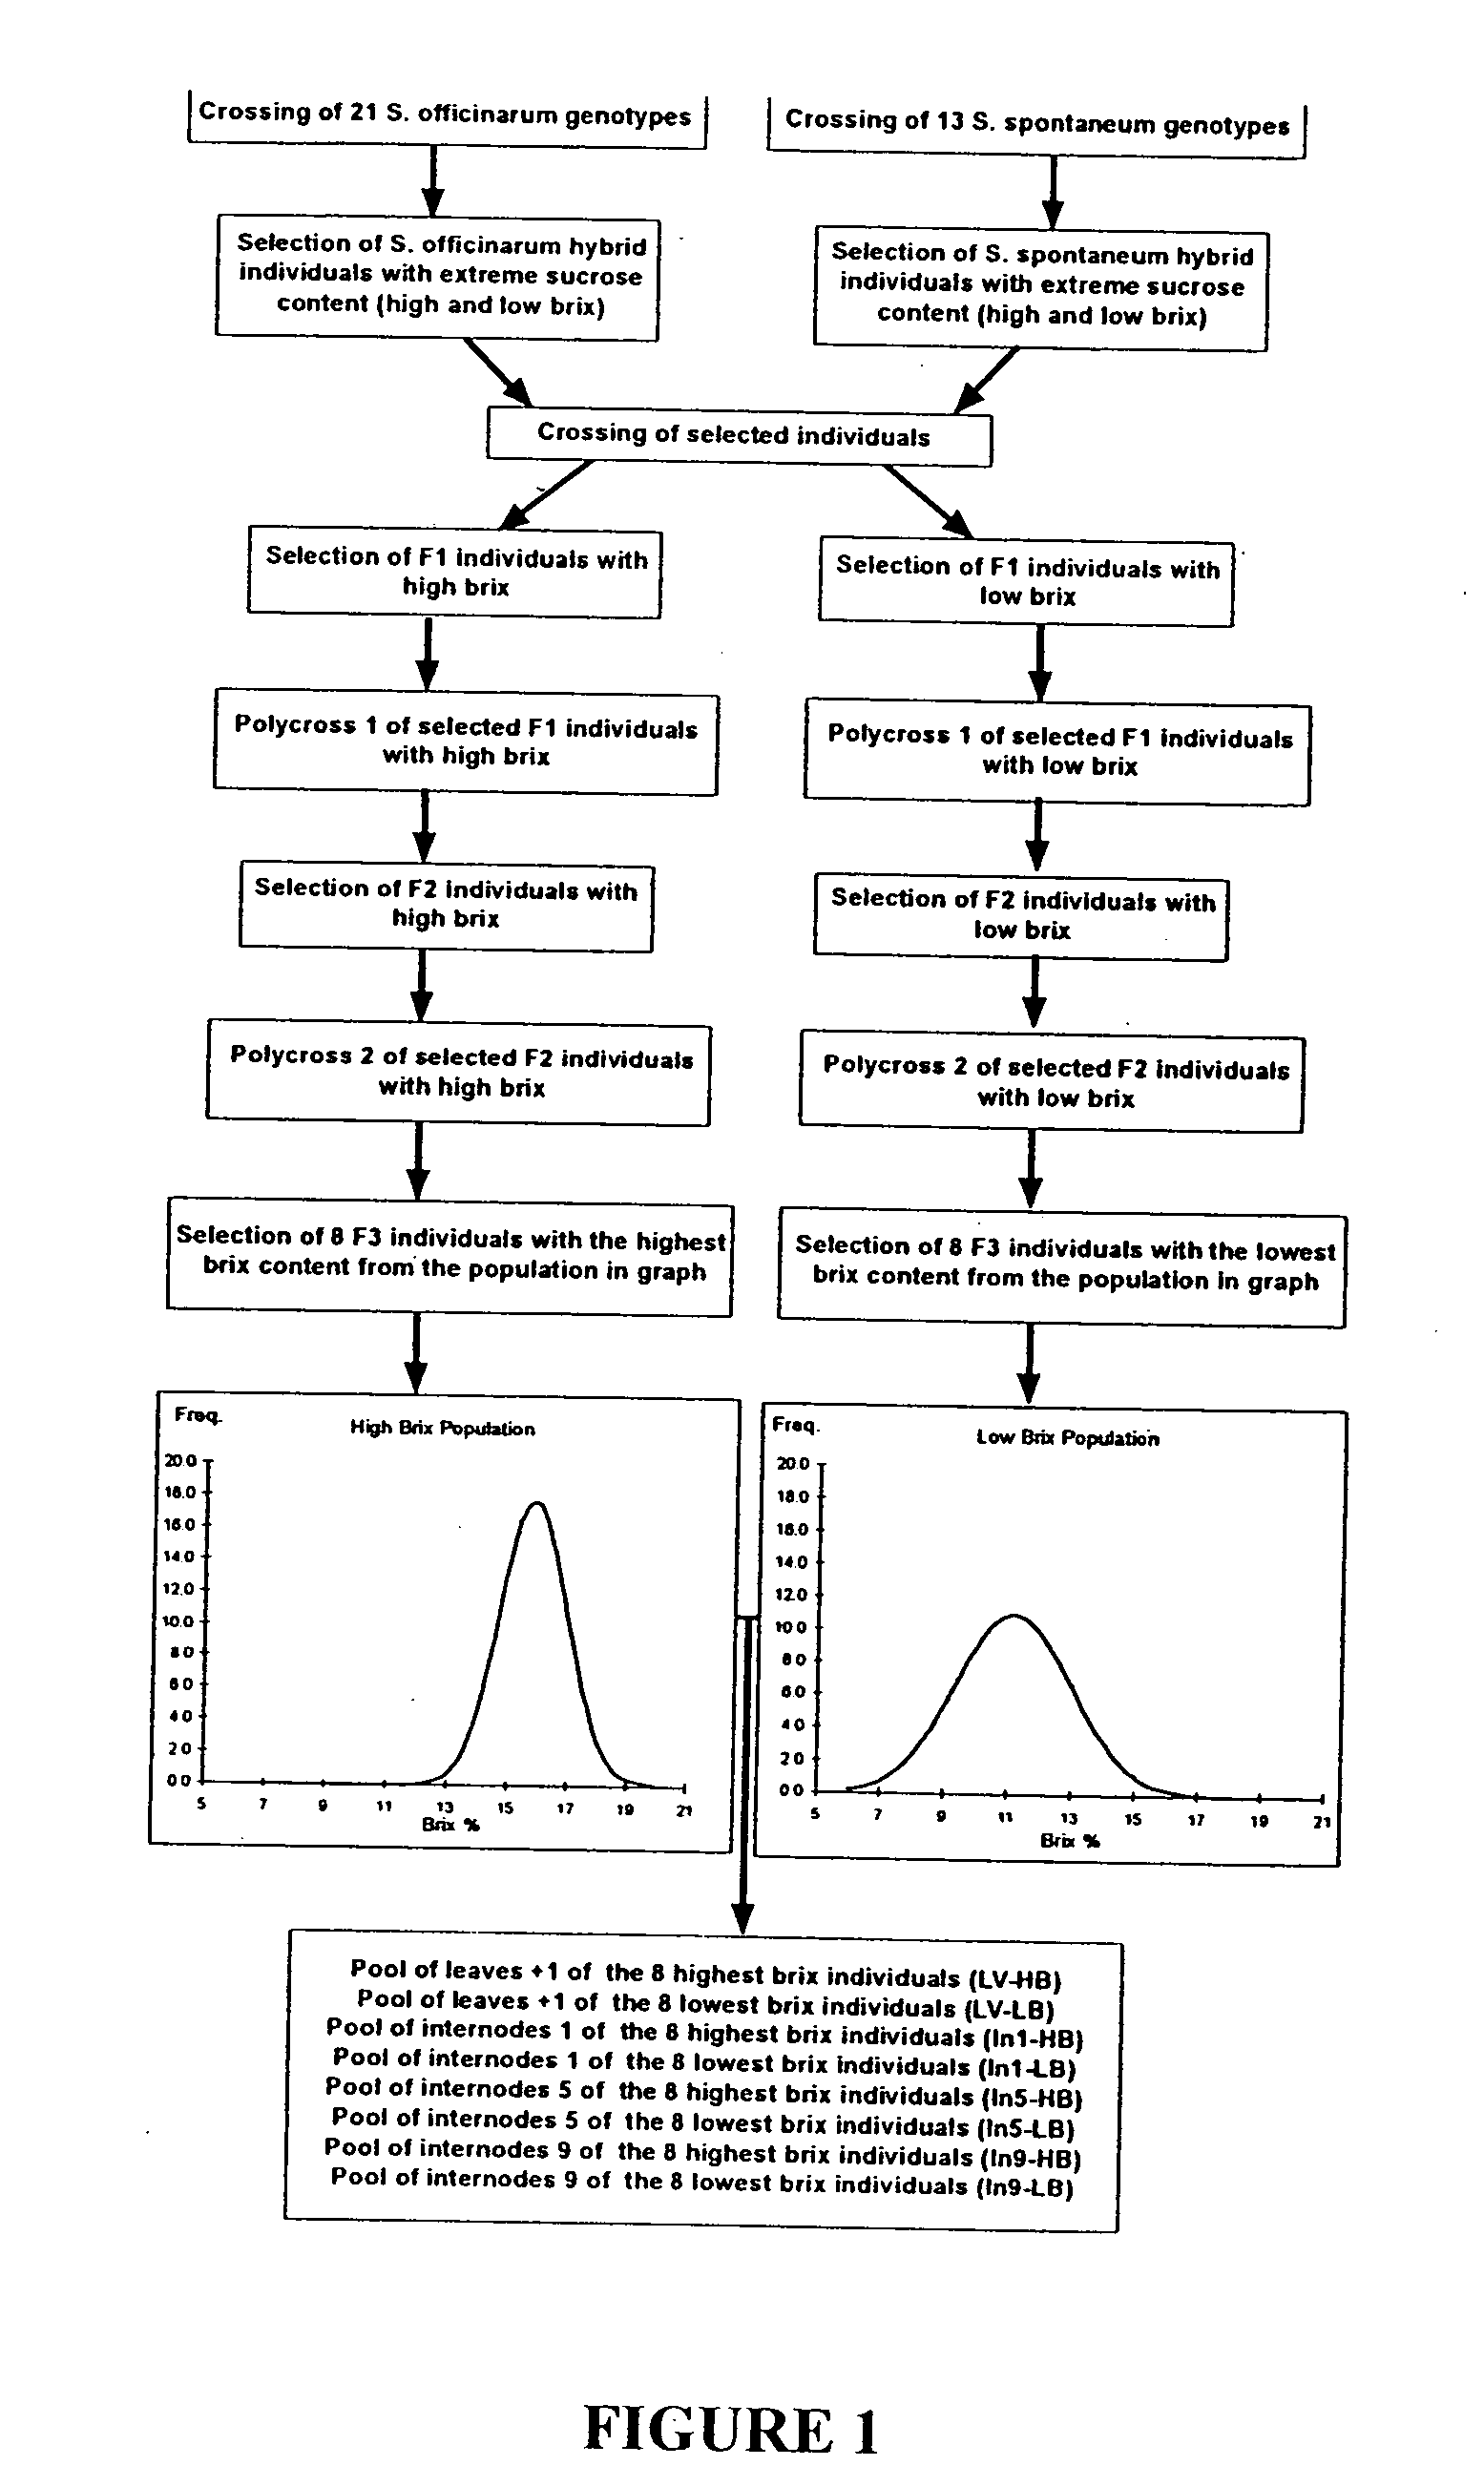 Genes associated to sucrose content